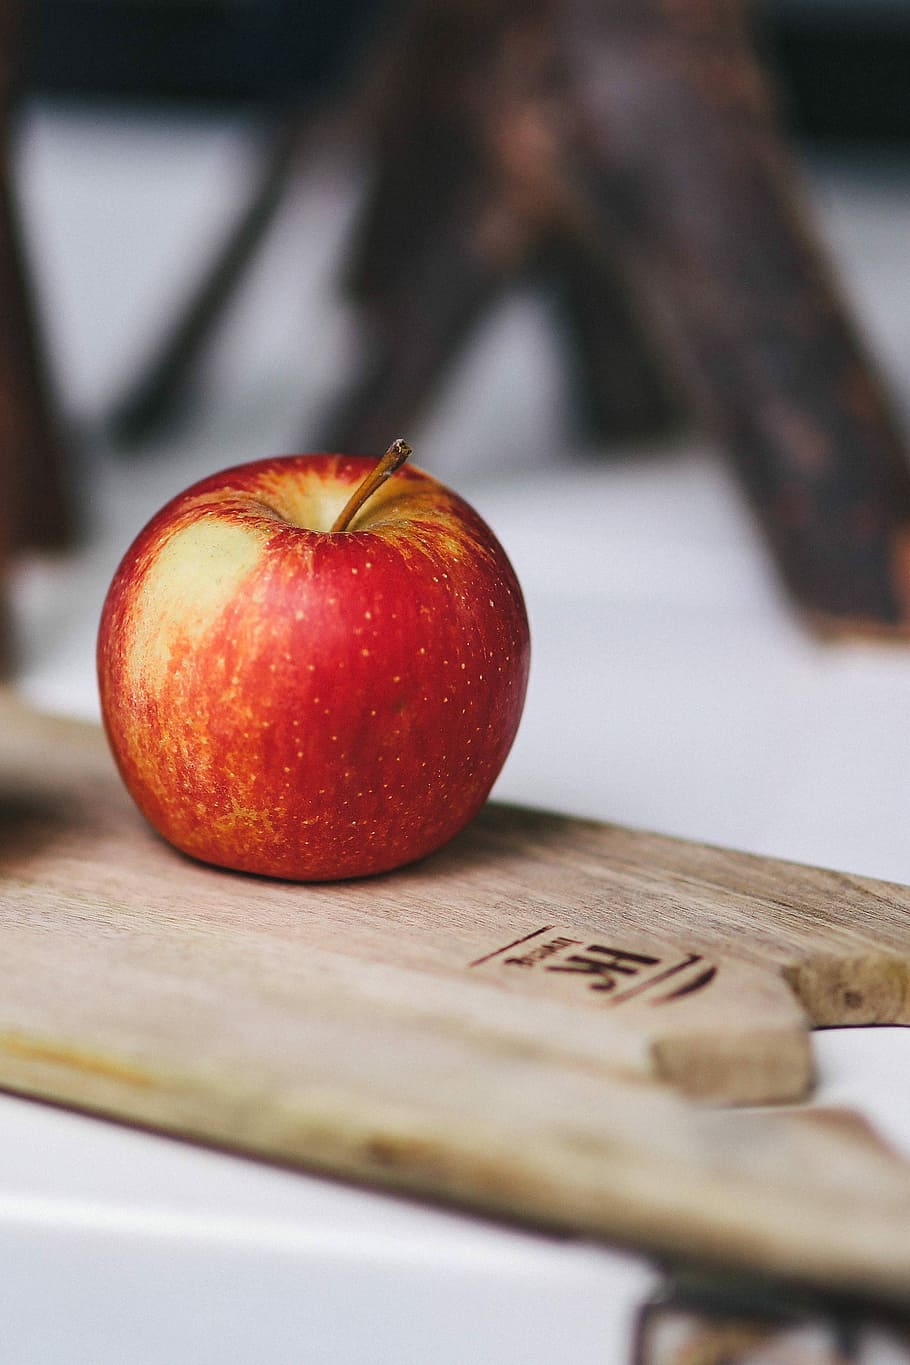 red apples, apples, Apple, fruit, healthy, snack, red, food, apple - Fruit, wood - Material